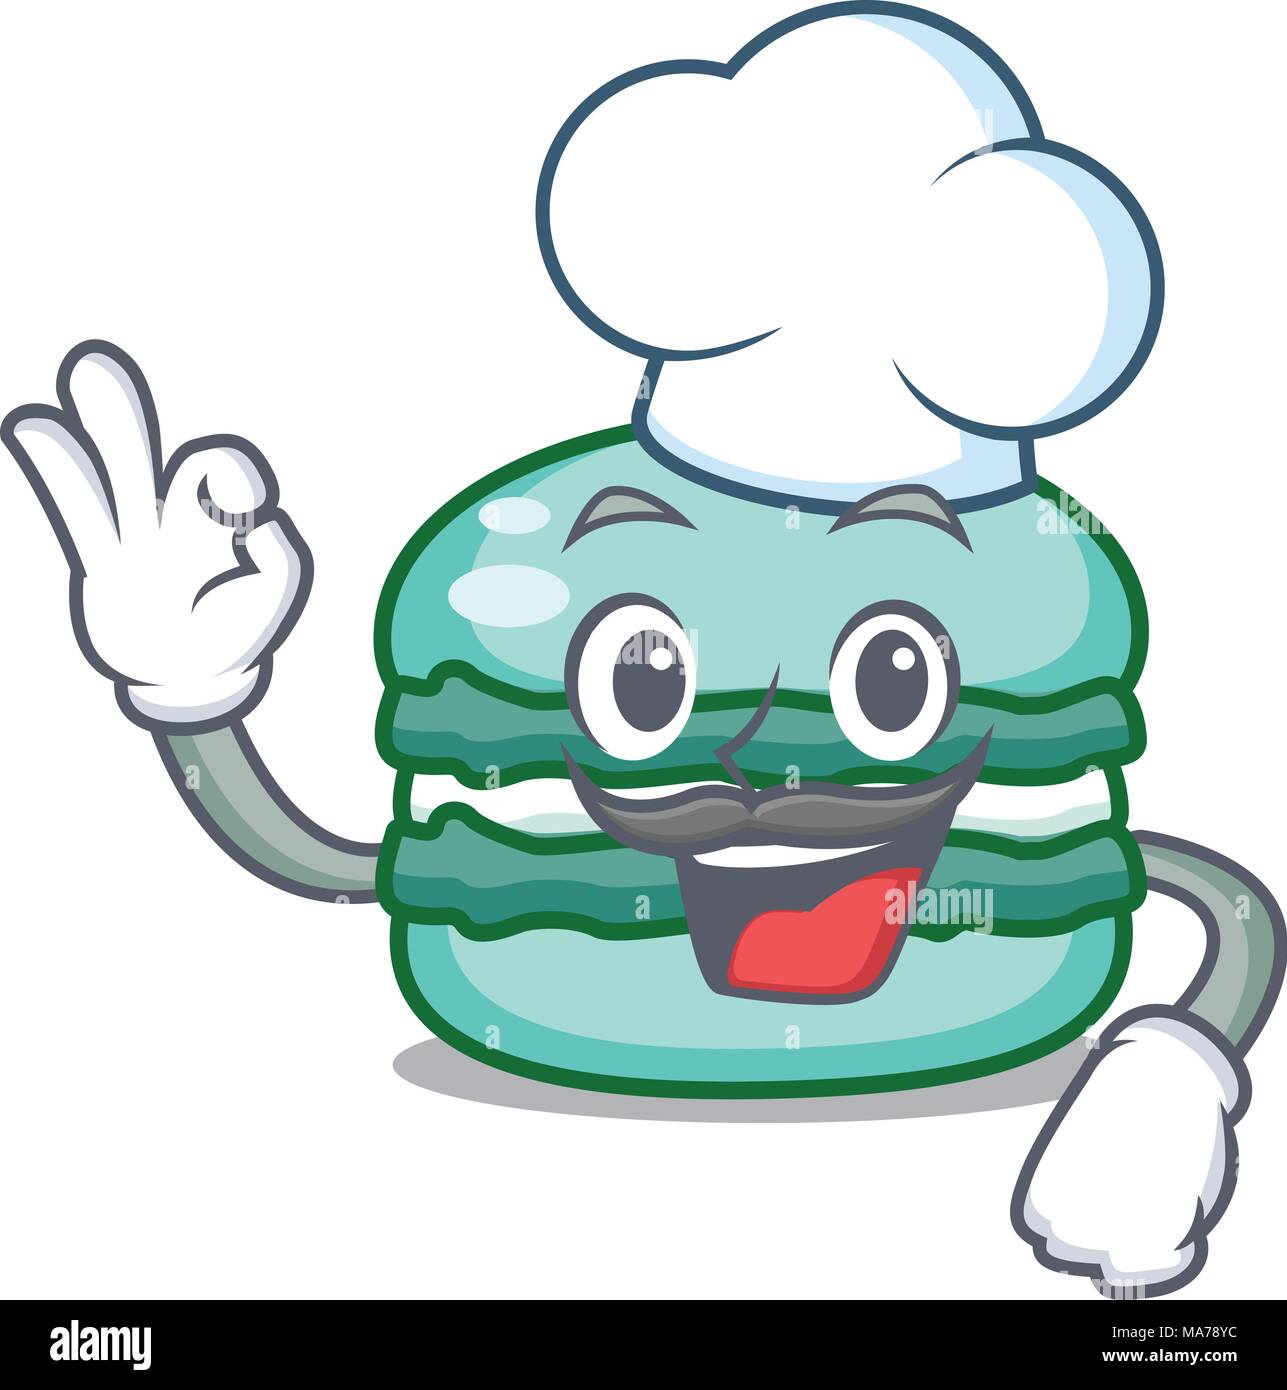 Chef Macaron Character Cartoon Style Stock Vector Image And Art Alamy 2563